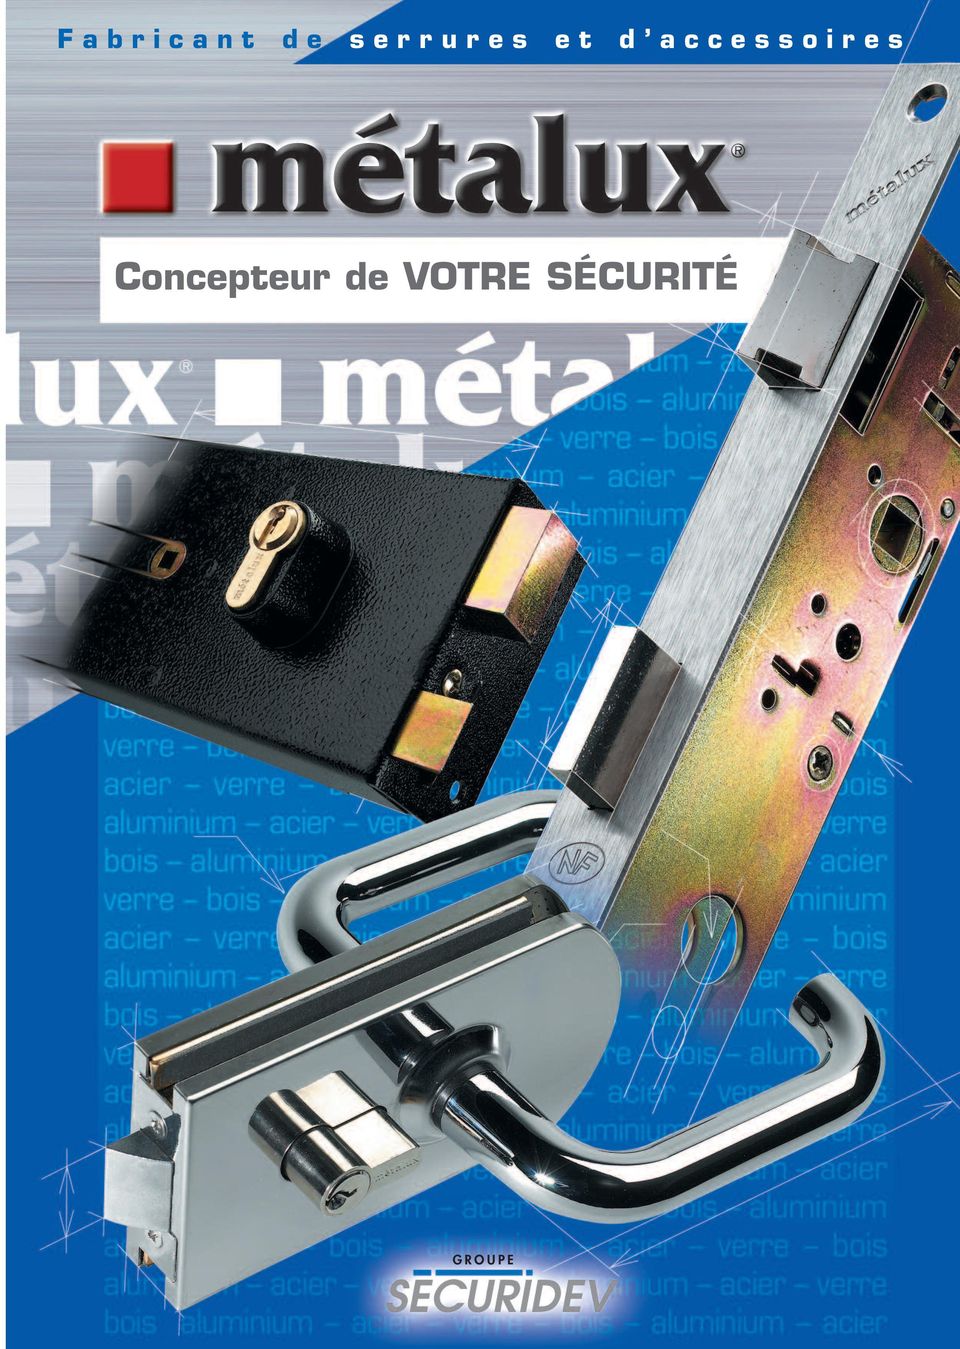 : +33 (0)3 25 05 03 86 - Fax : +33 (0)3 25 56 62 61 www.metalux.fr - contact@metalux.fr Service Export : Tél.